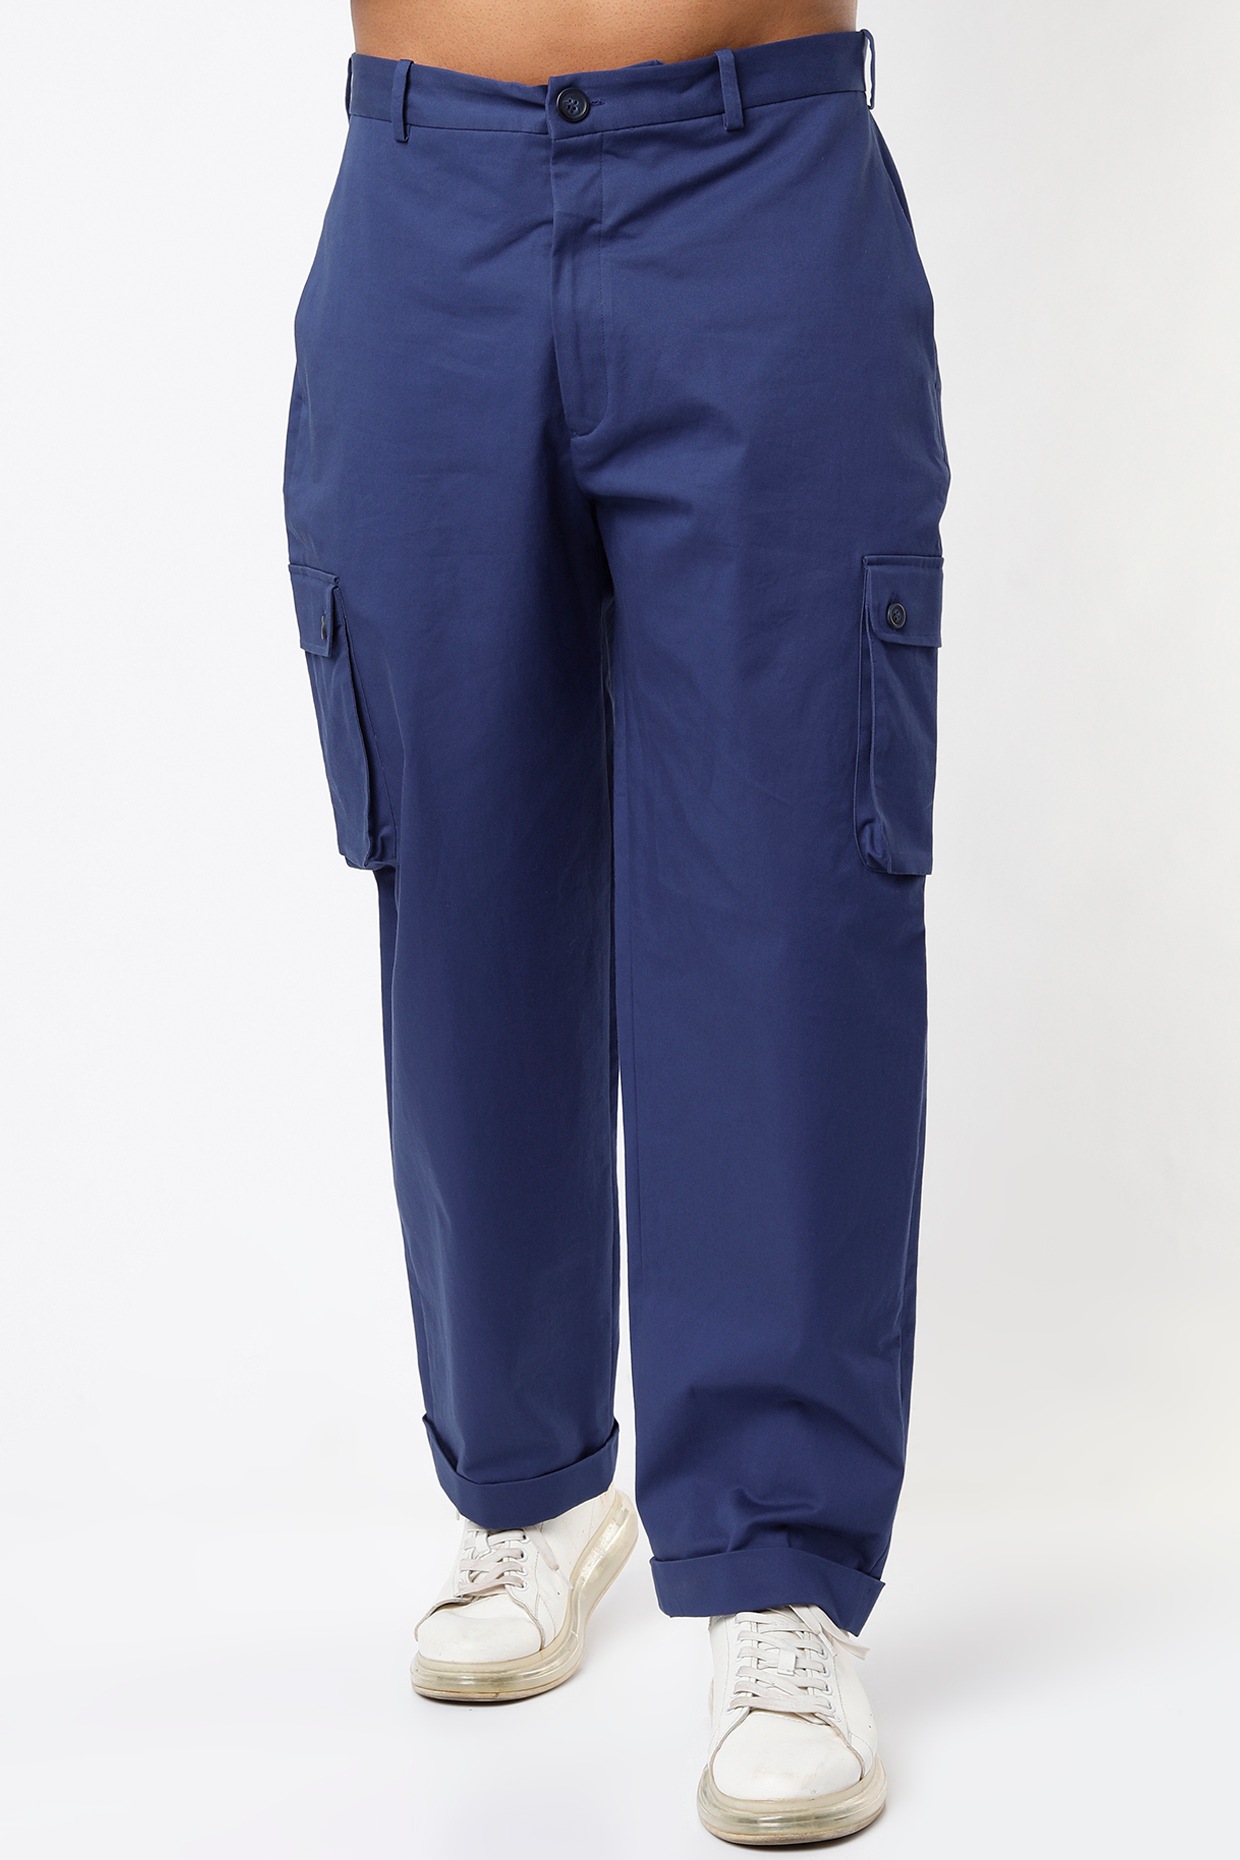 Buy Men's Blue Loose Comfort Fit Cargo Track Pants Online at Bewakoof